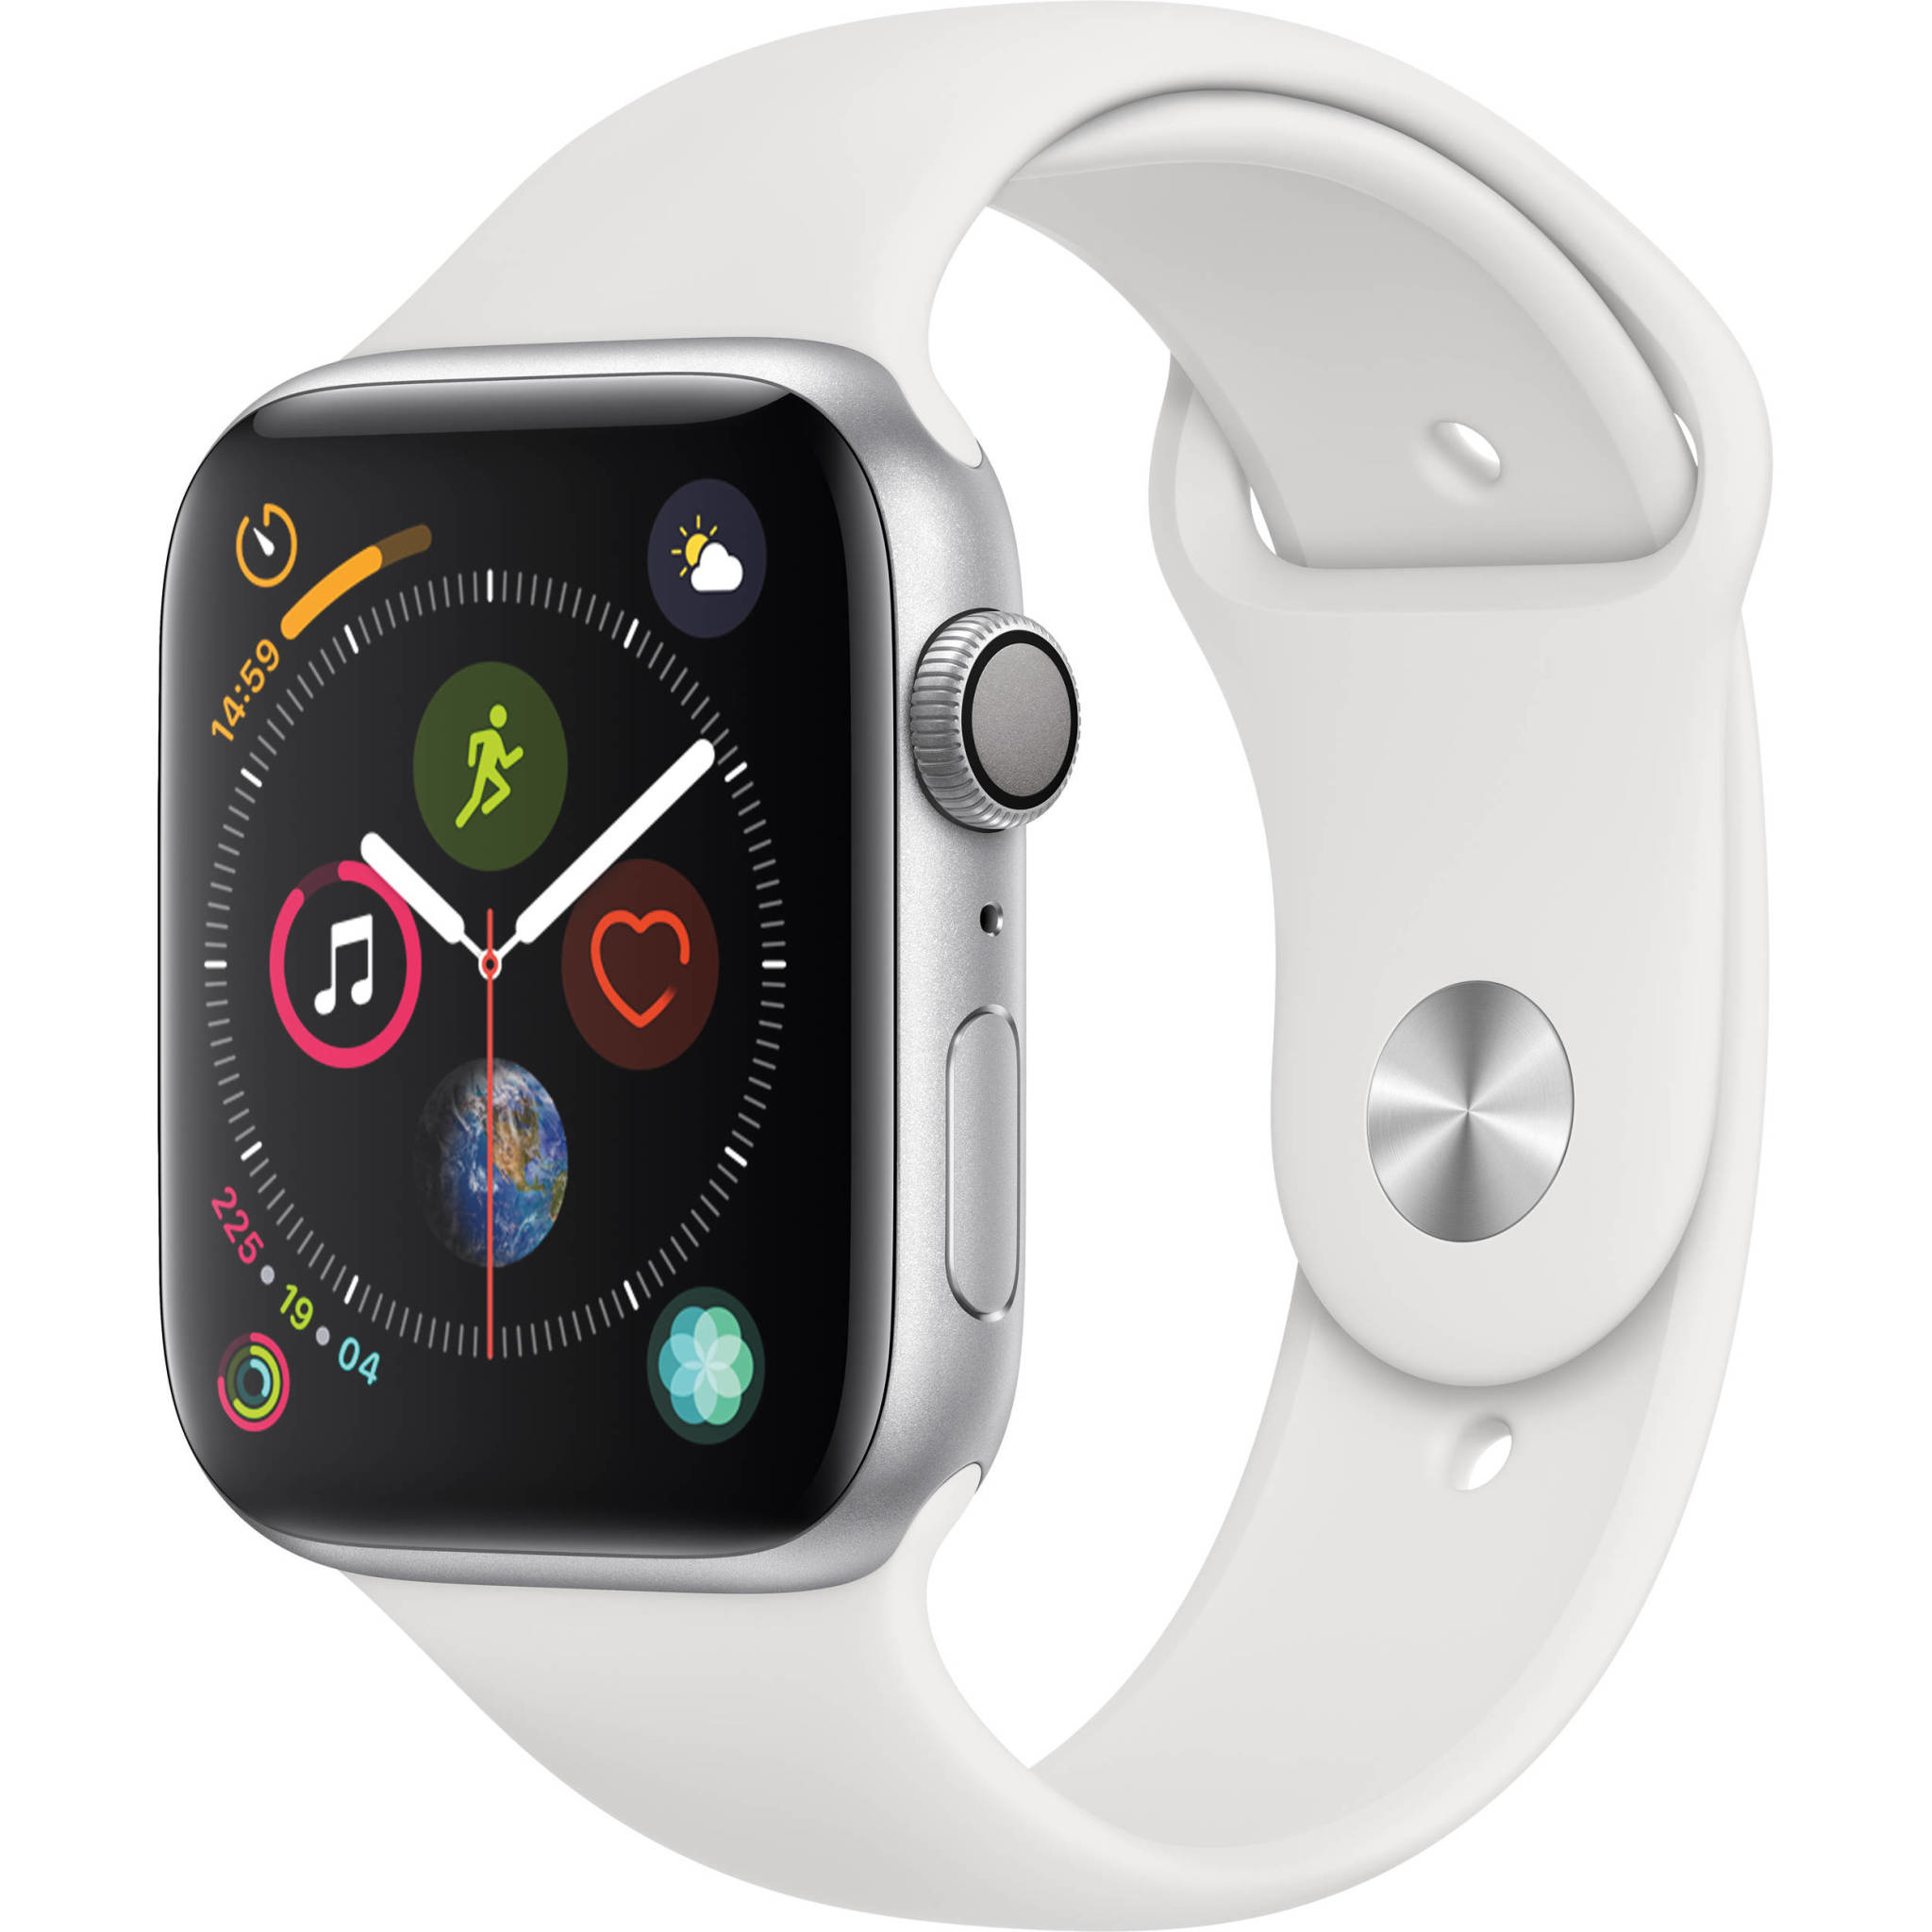 Apple Apple Watch Series 4 GPS, 44mm Silver Aluminum Case